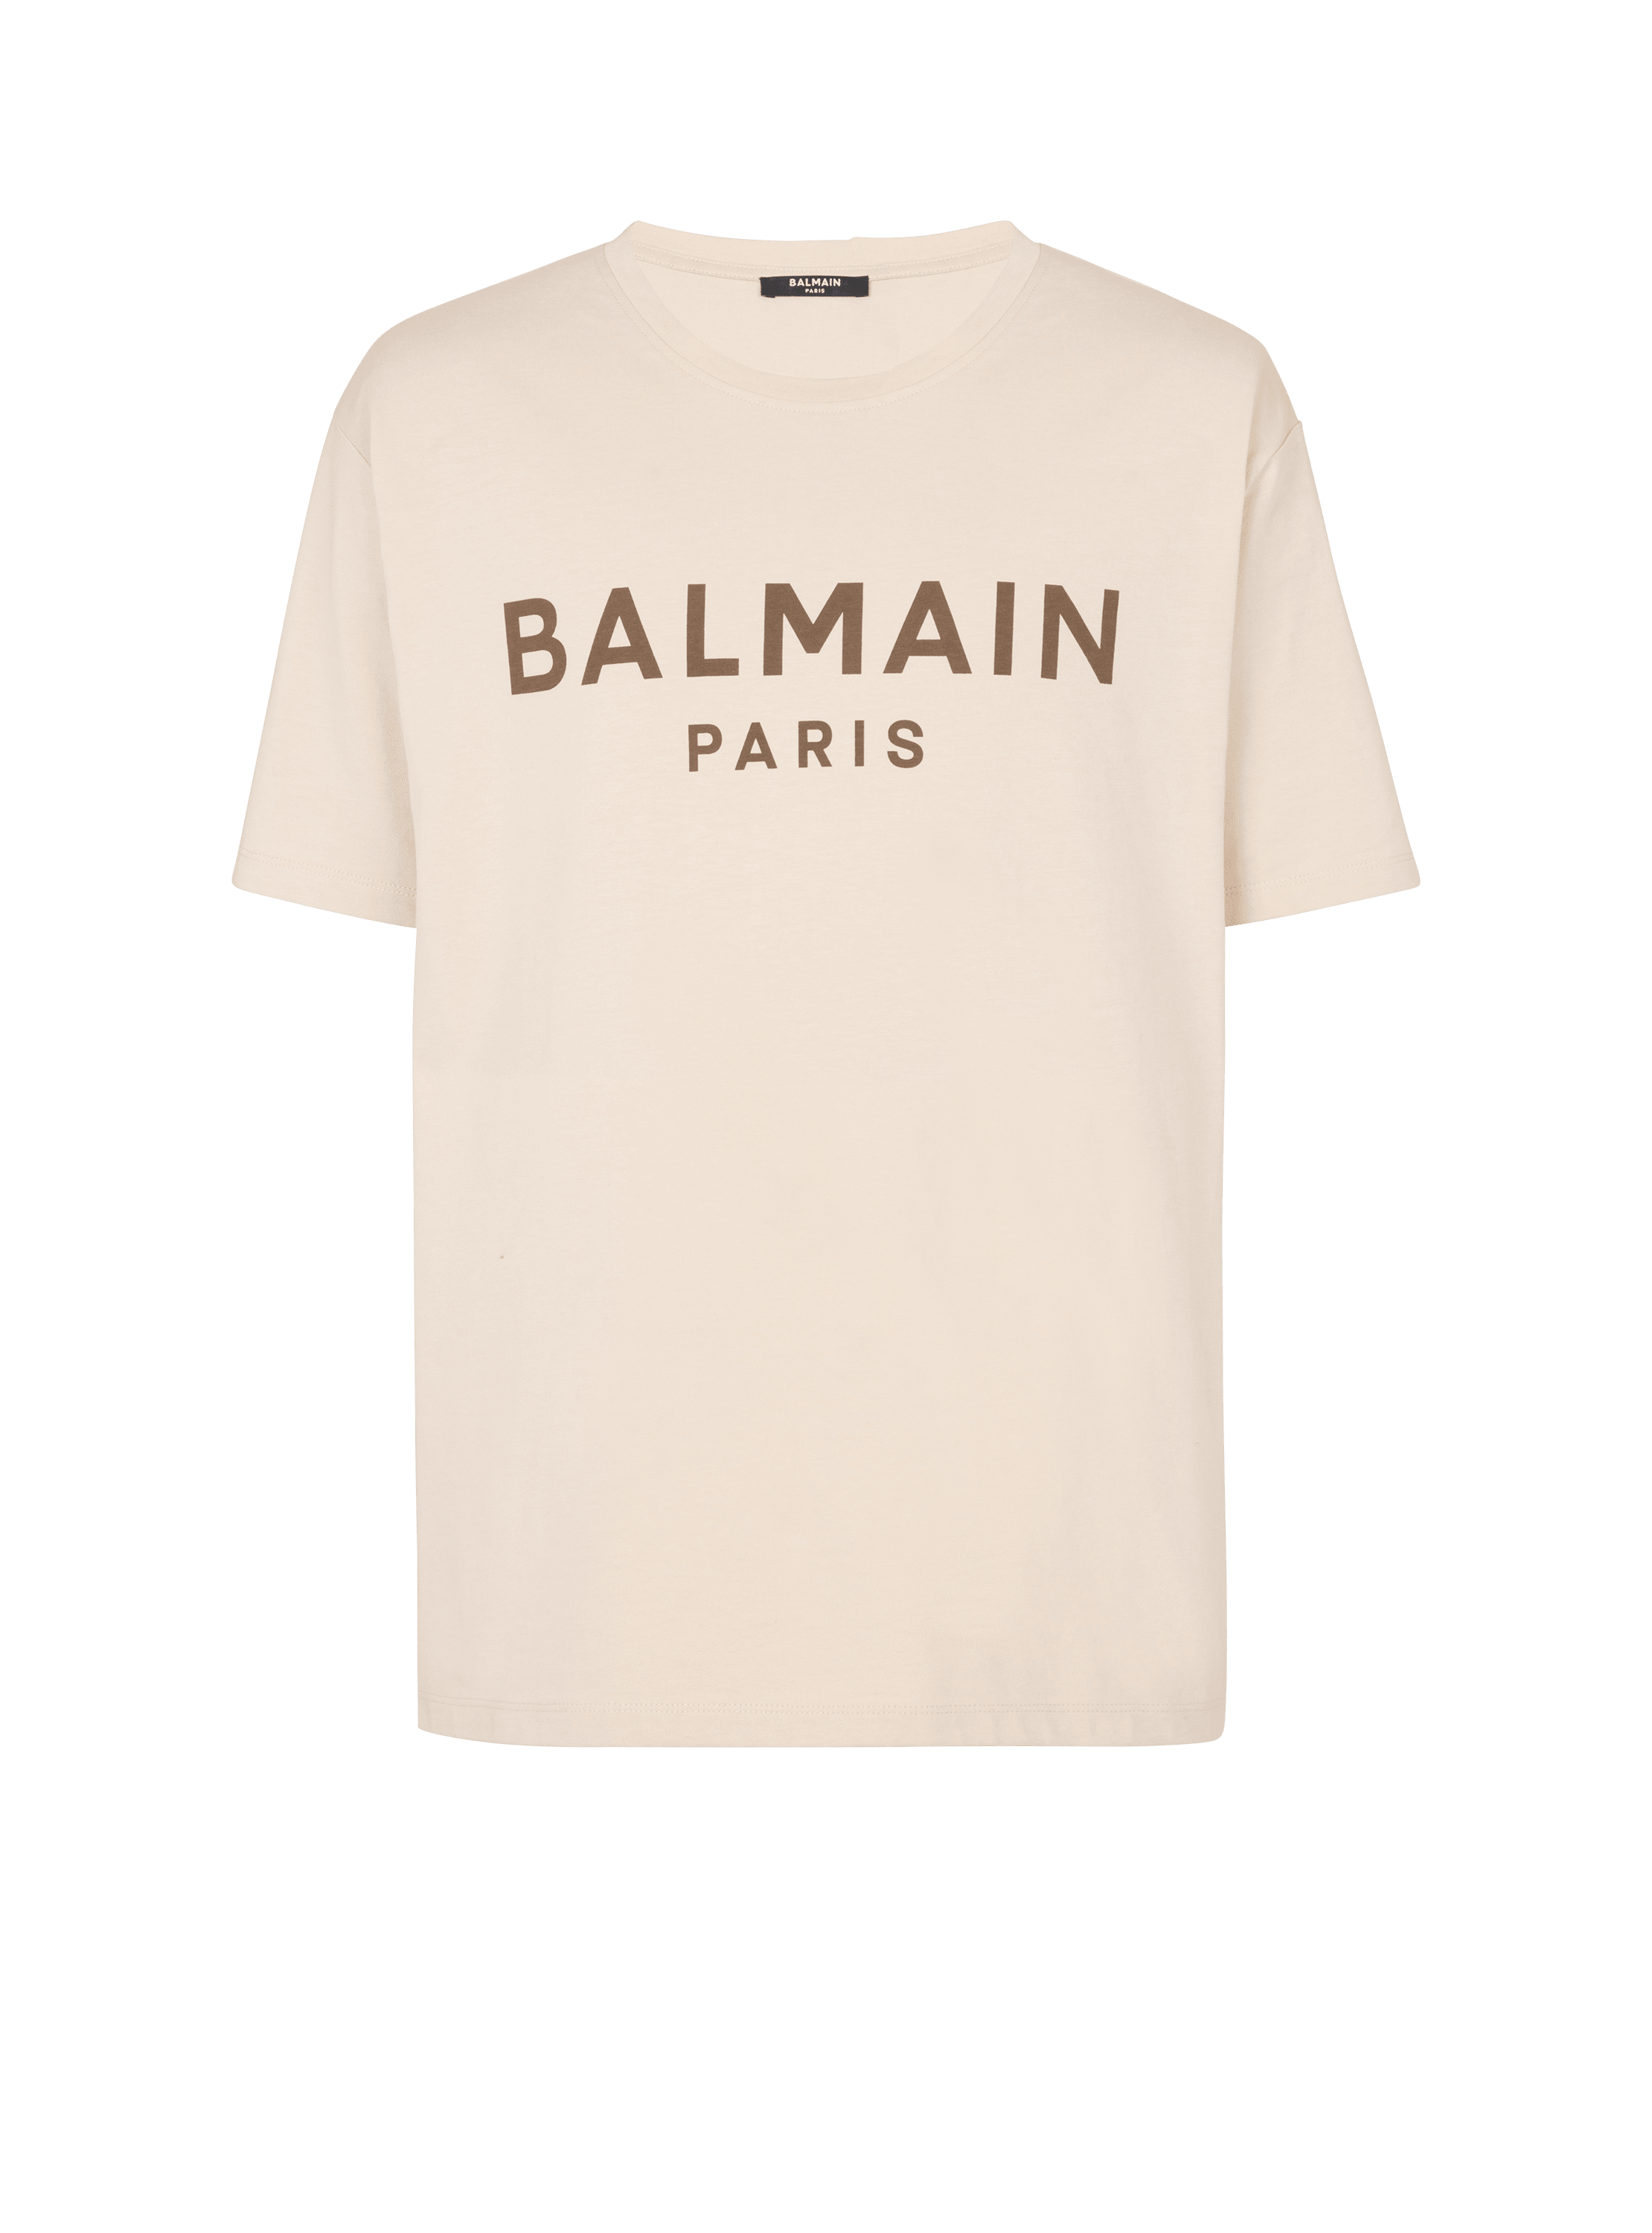 Balmain Parisプリント Tシャツ - Men | BALMAIN